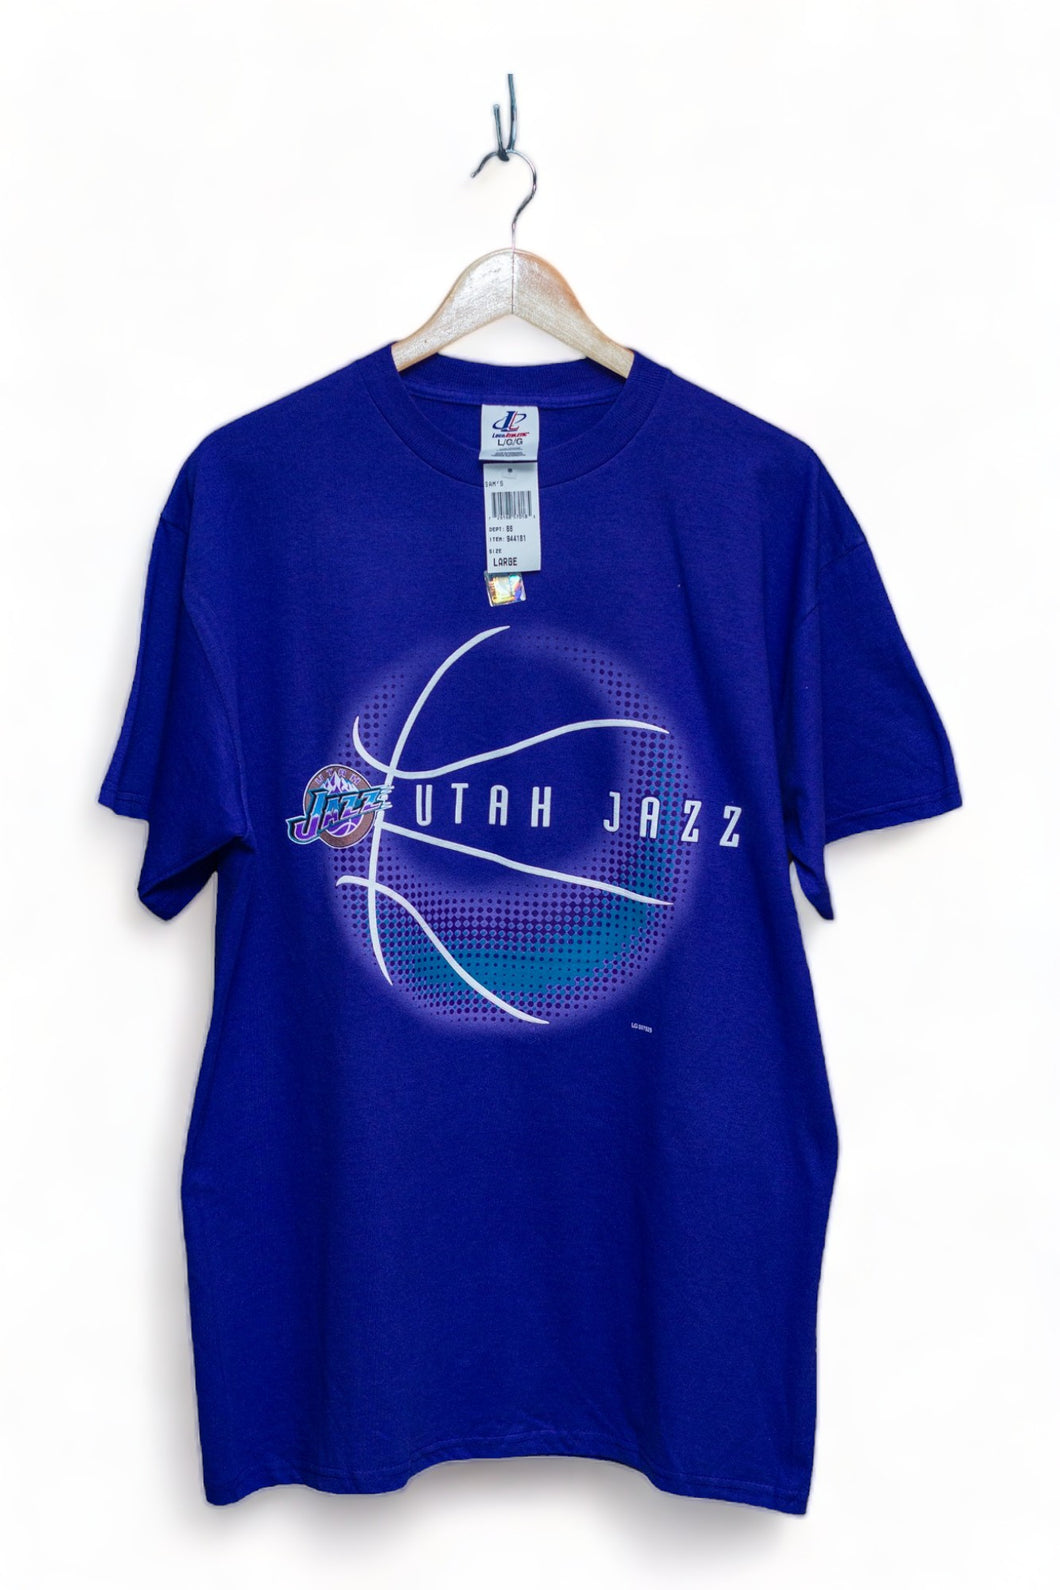 Utah Jazz - NBA Graphic T-Shirt NWT (L)